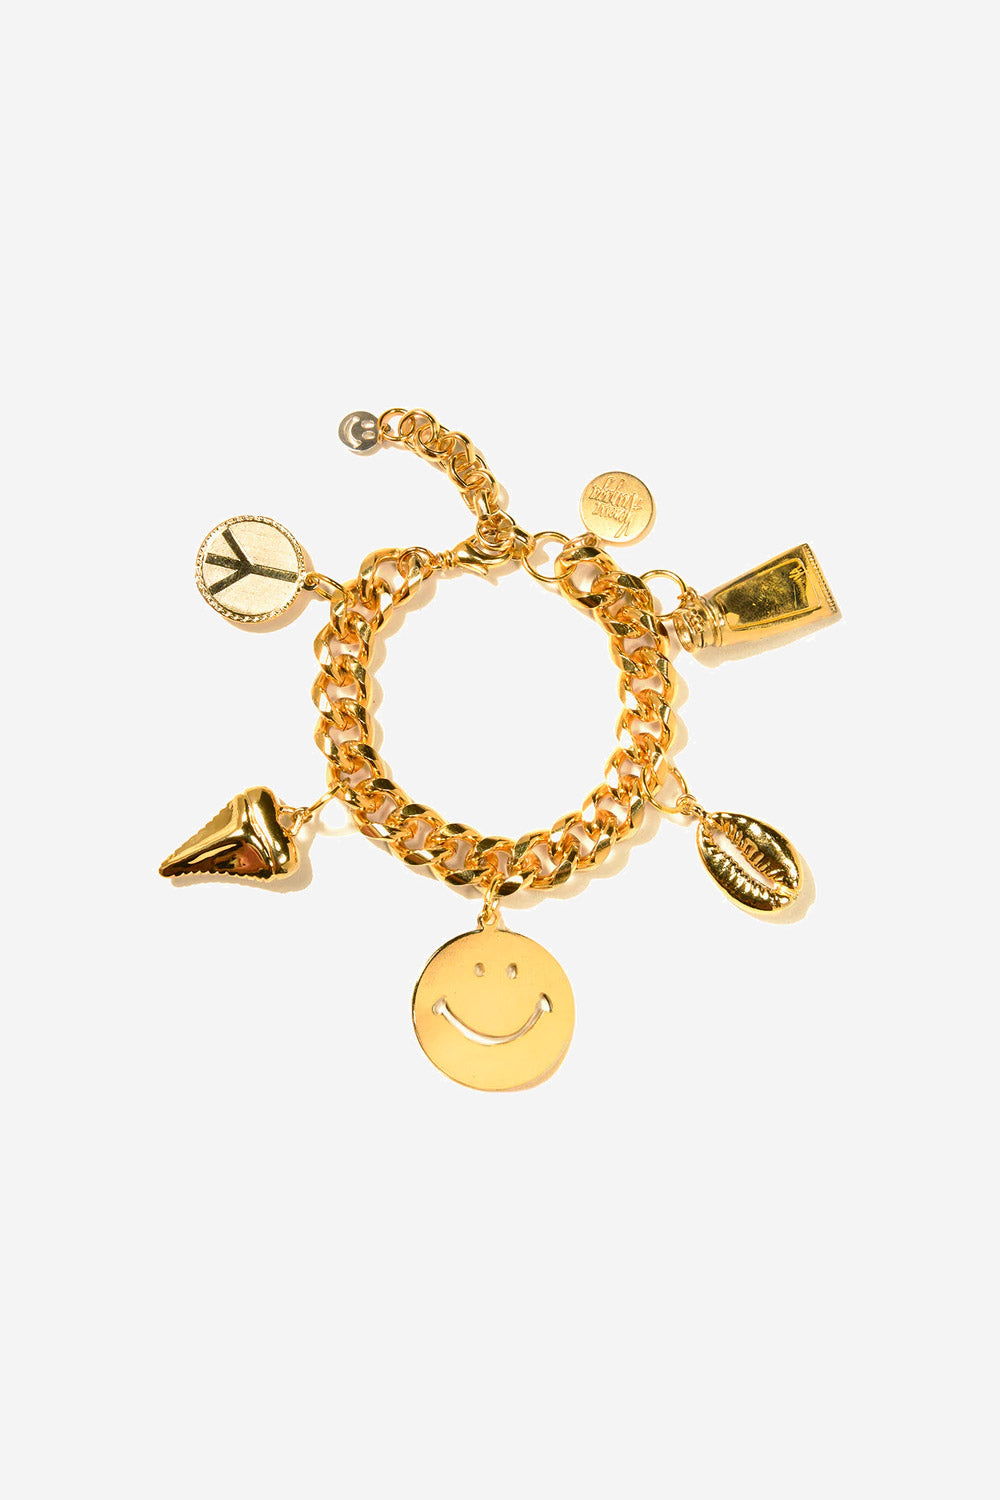 The golden road bracelet